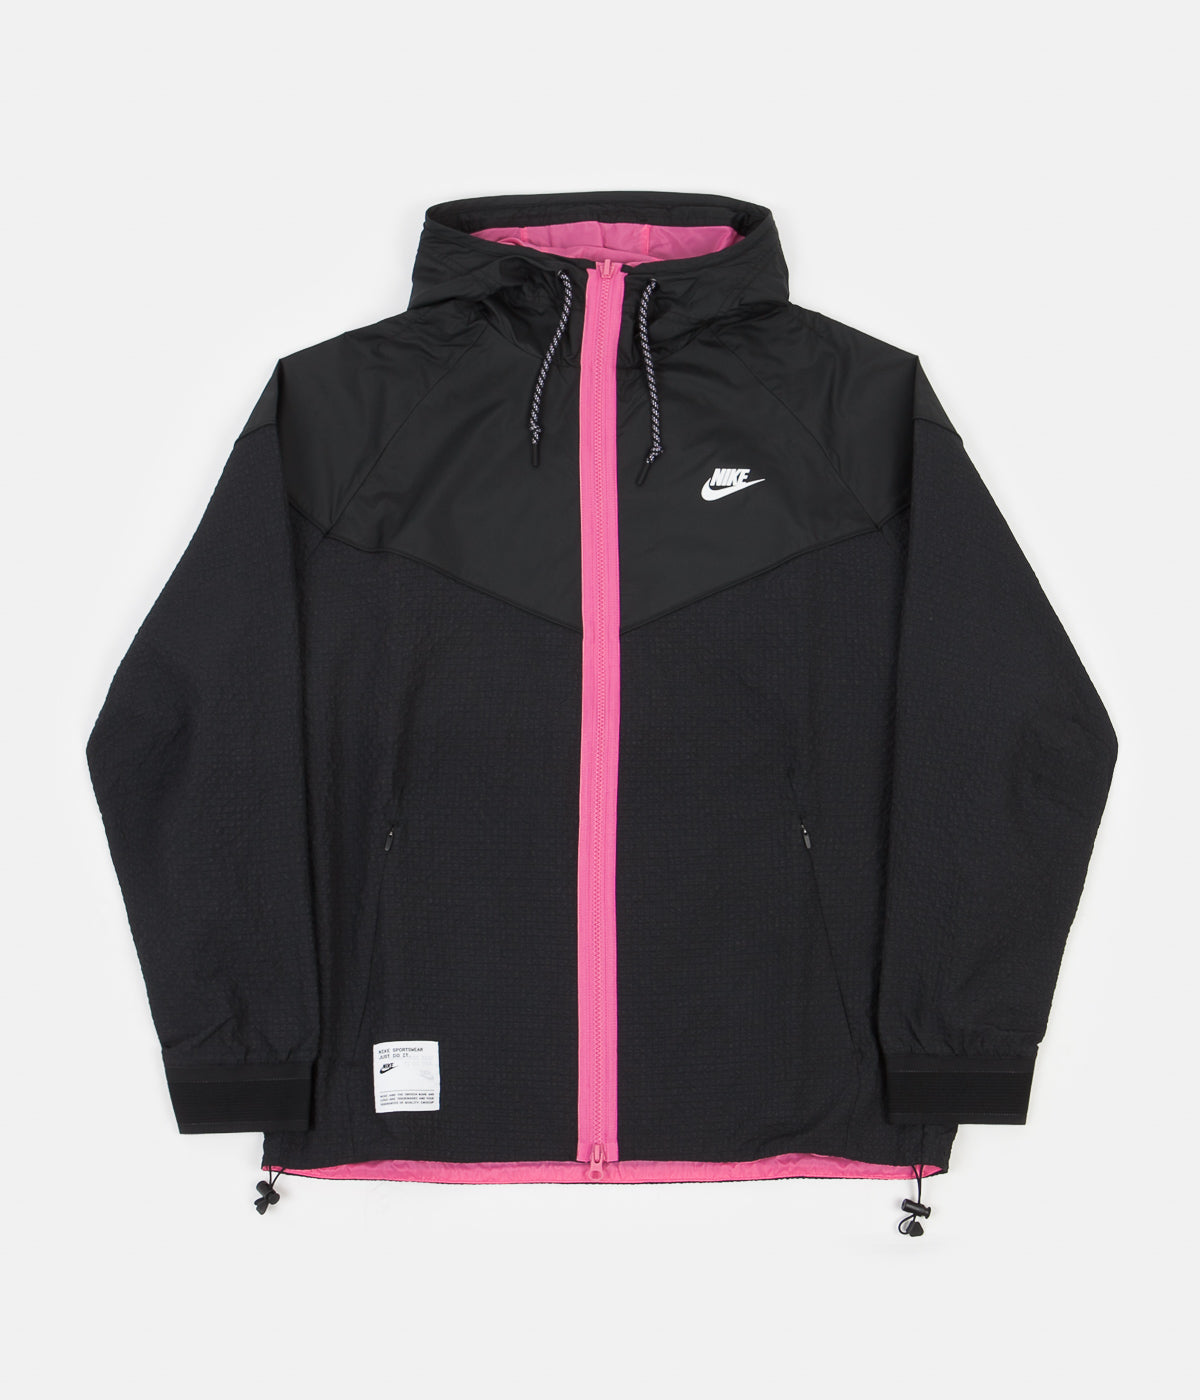 nike pink and black jacket